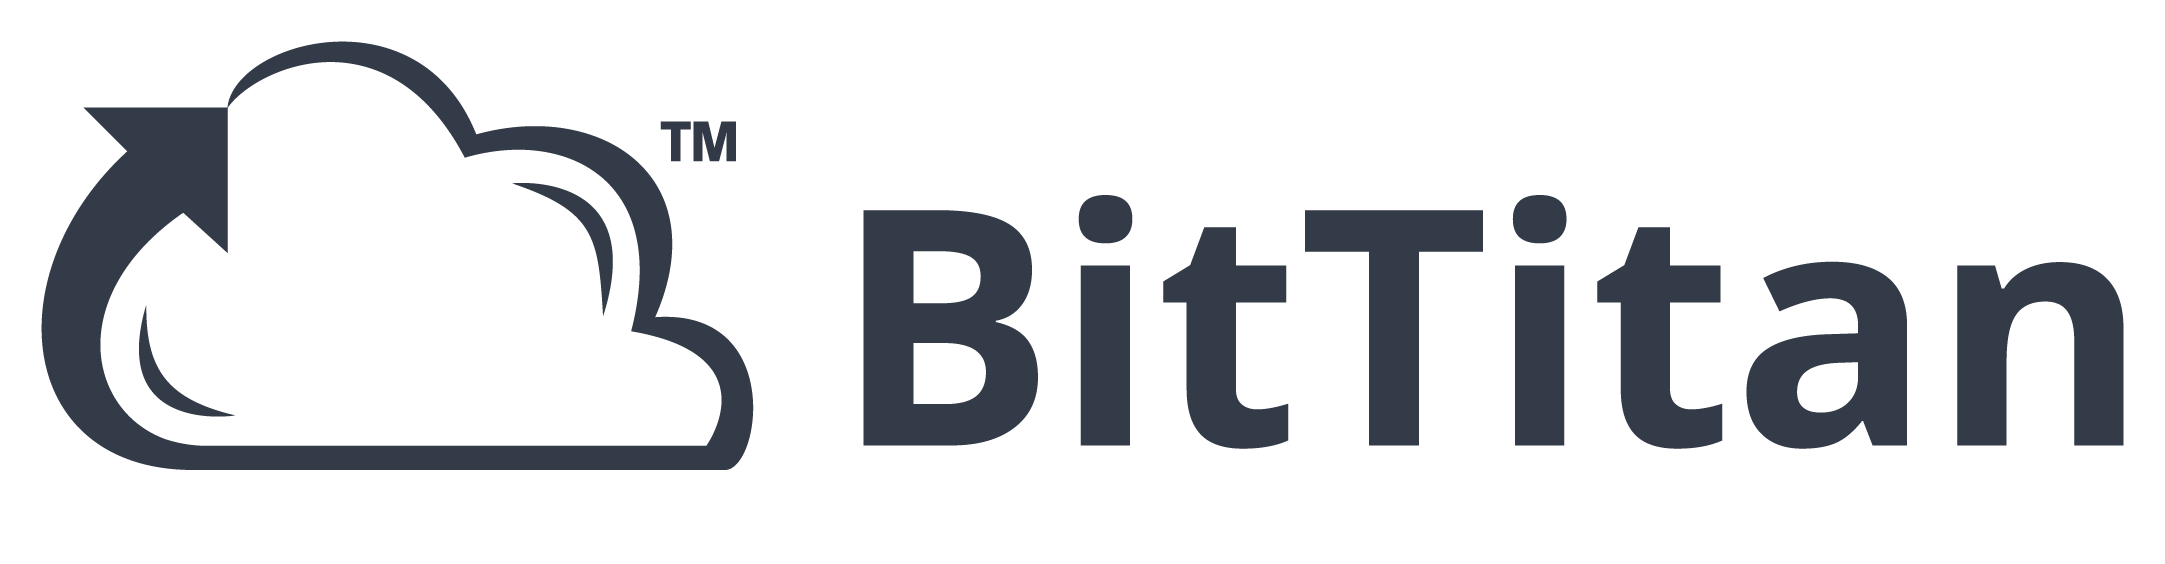 BitTitan Logo - BitTitan | The ChannelPro Network